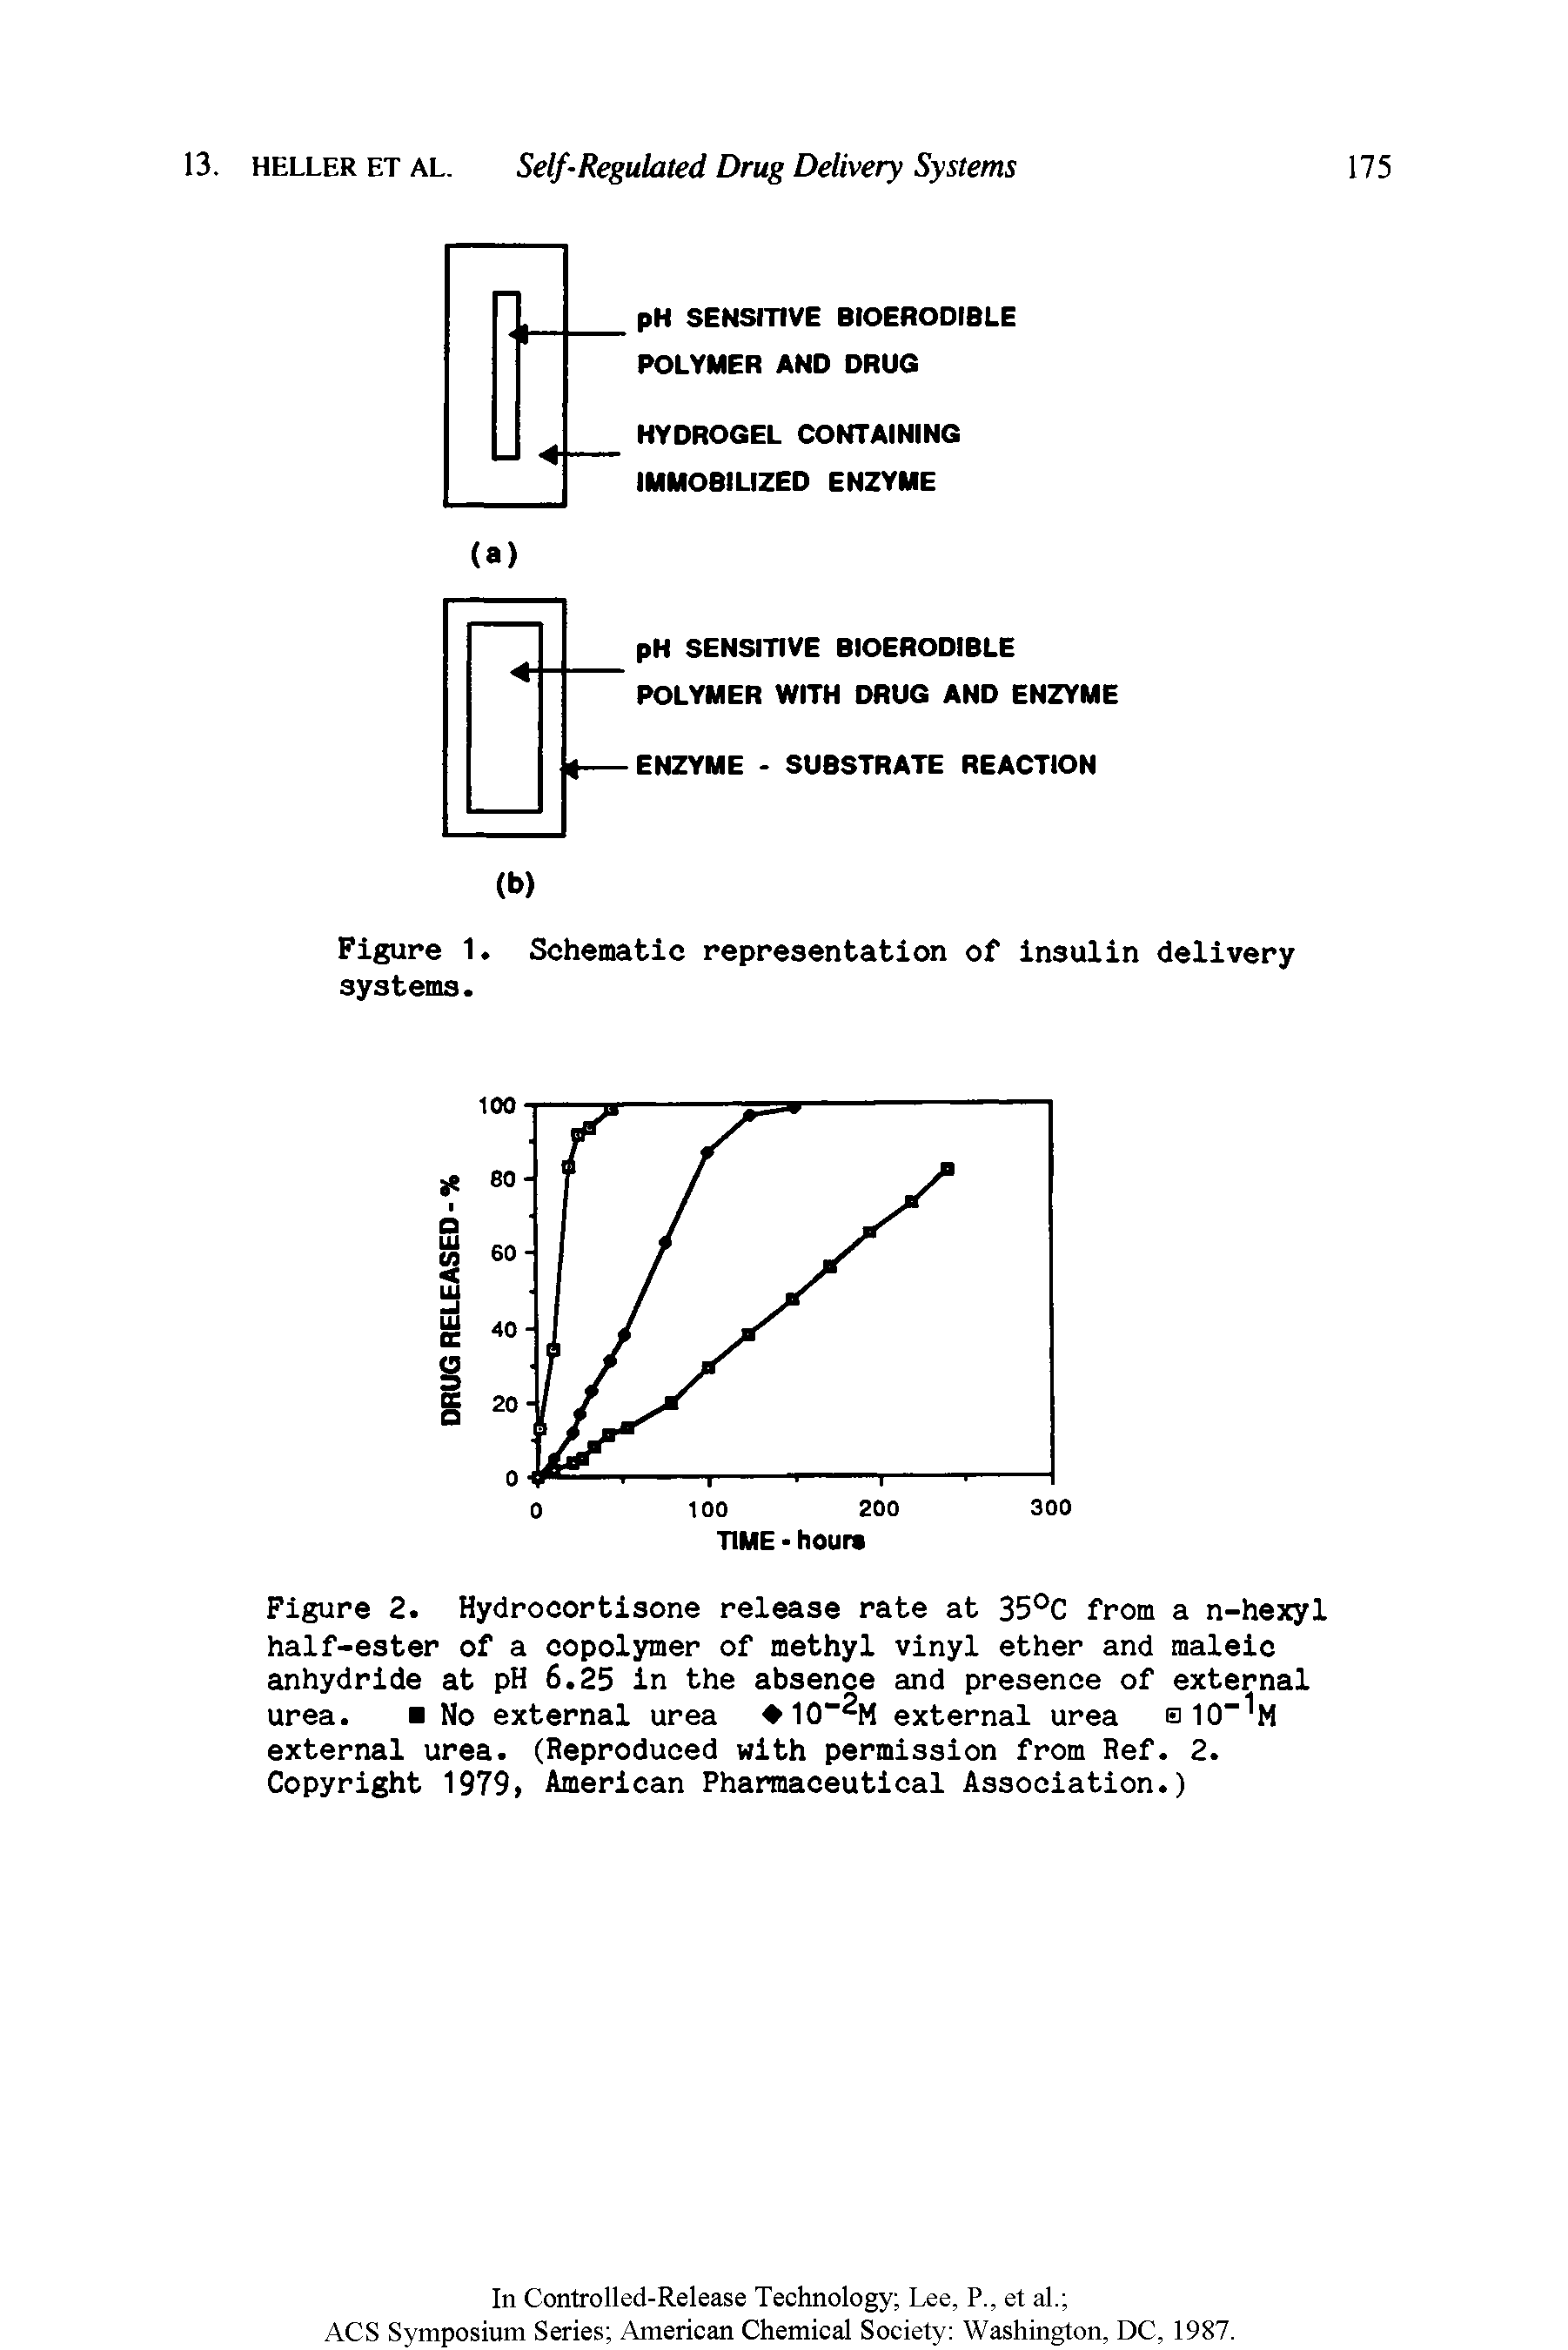 Figure 1. Schematic representation of insulin delivery systems.